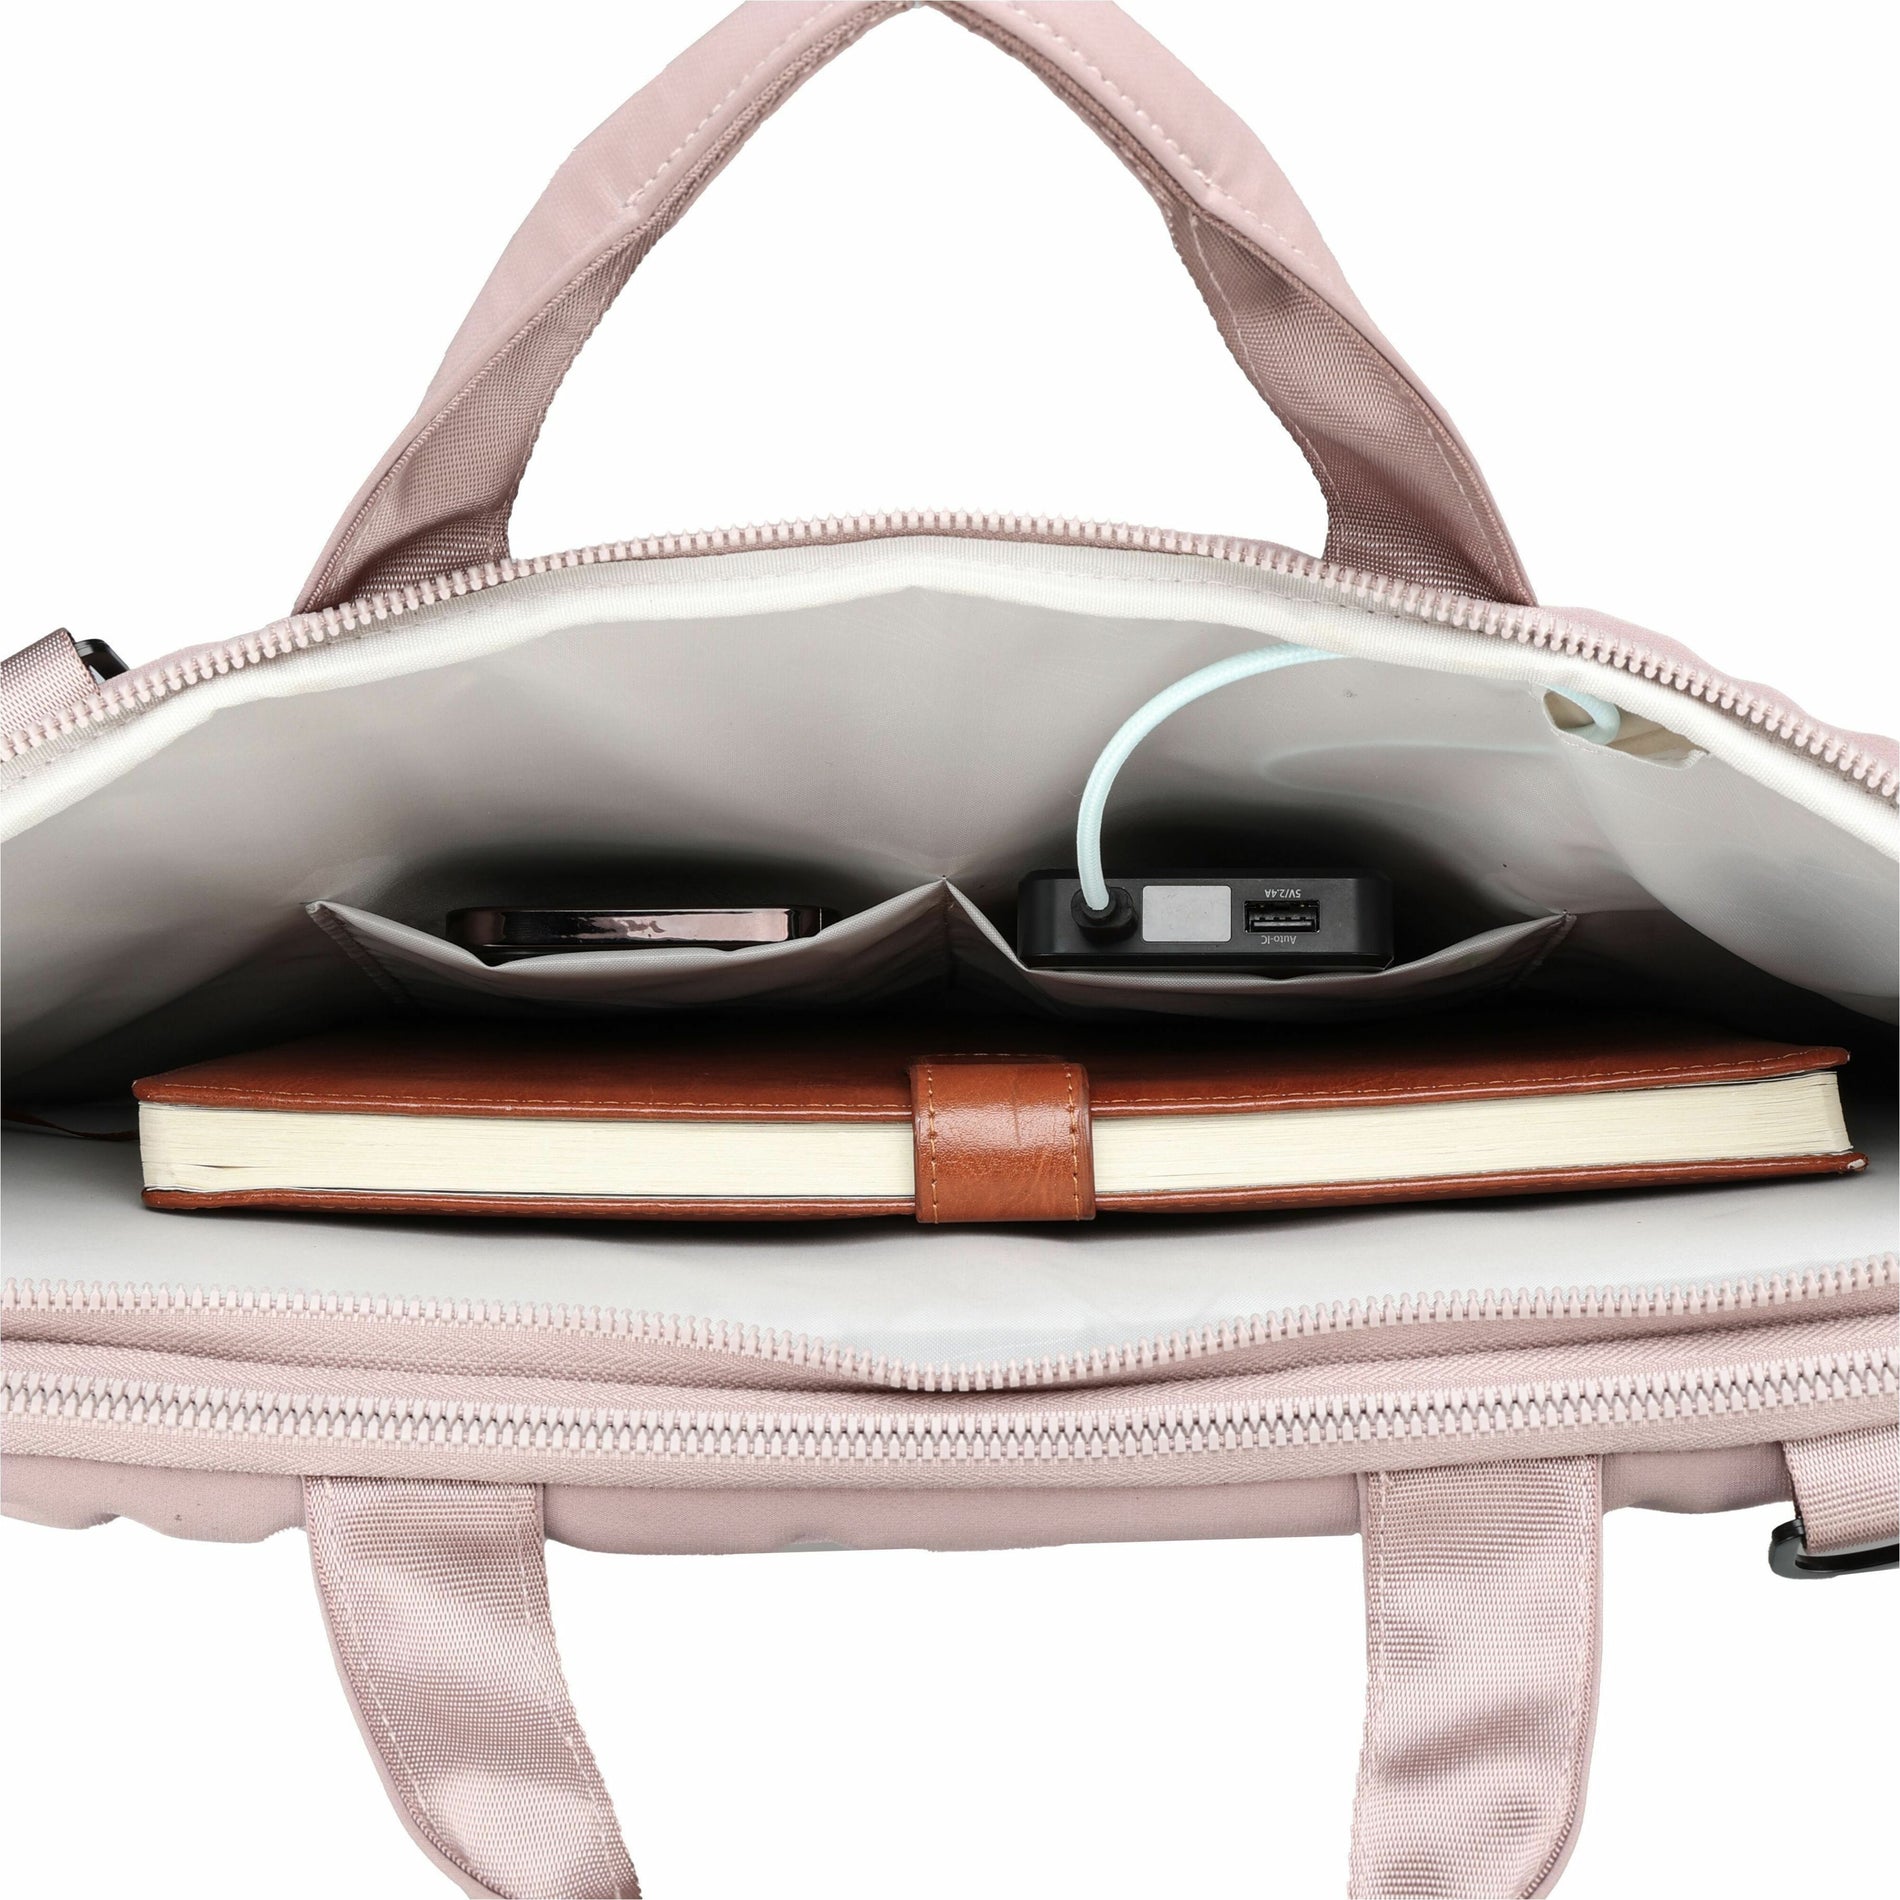 Swissdigital Design SD8533-82 Carrying Case, Sleeve for MacBook Pro, Notebook, Tablet, Smartphone